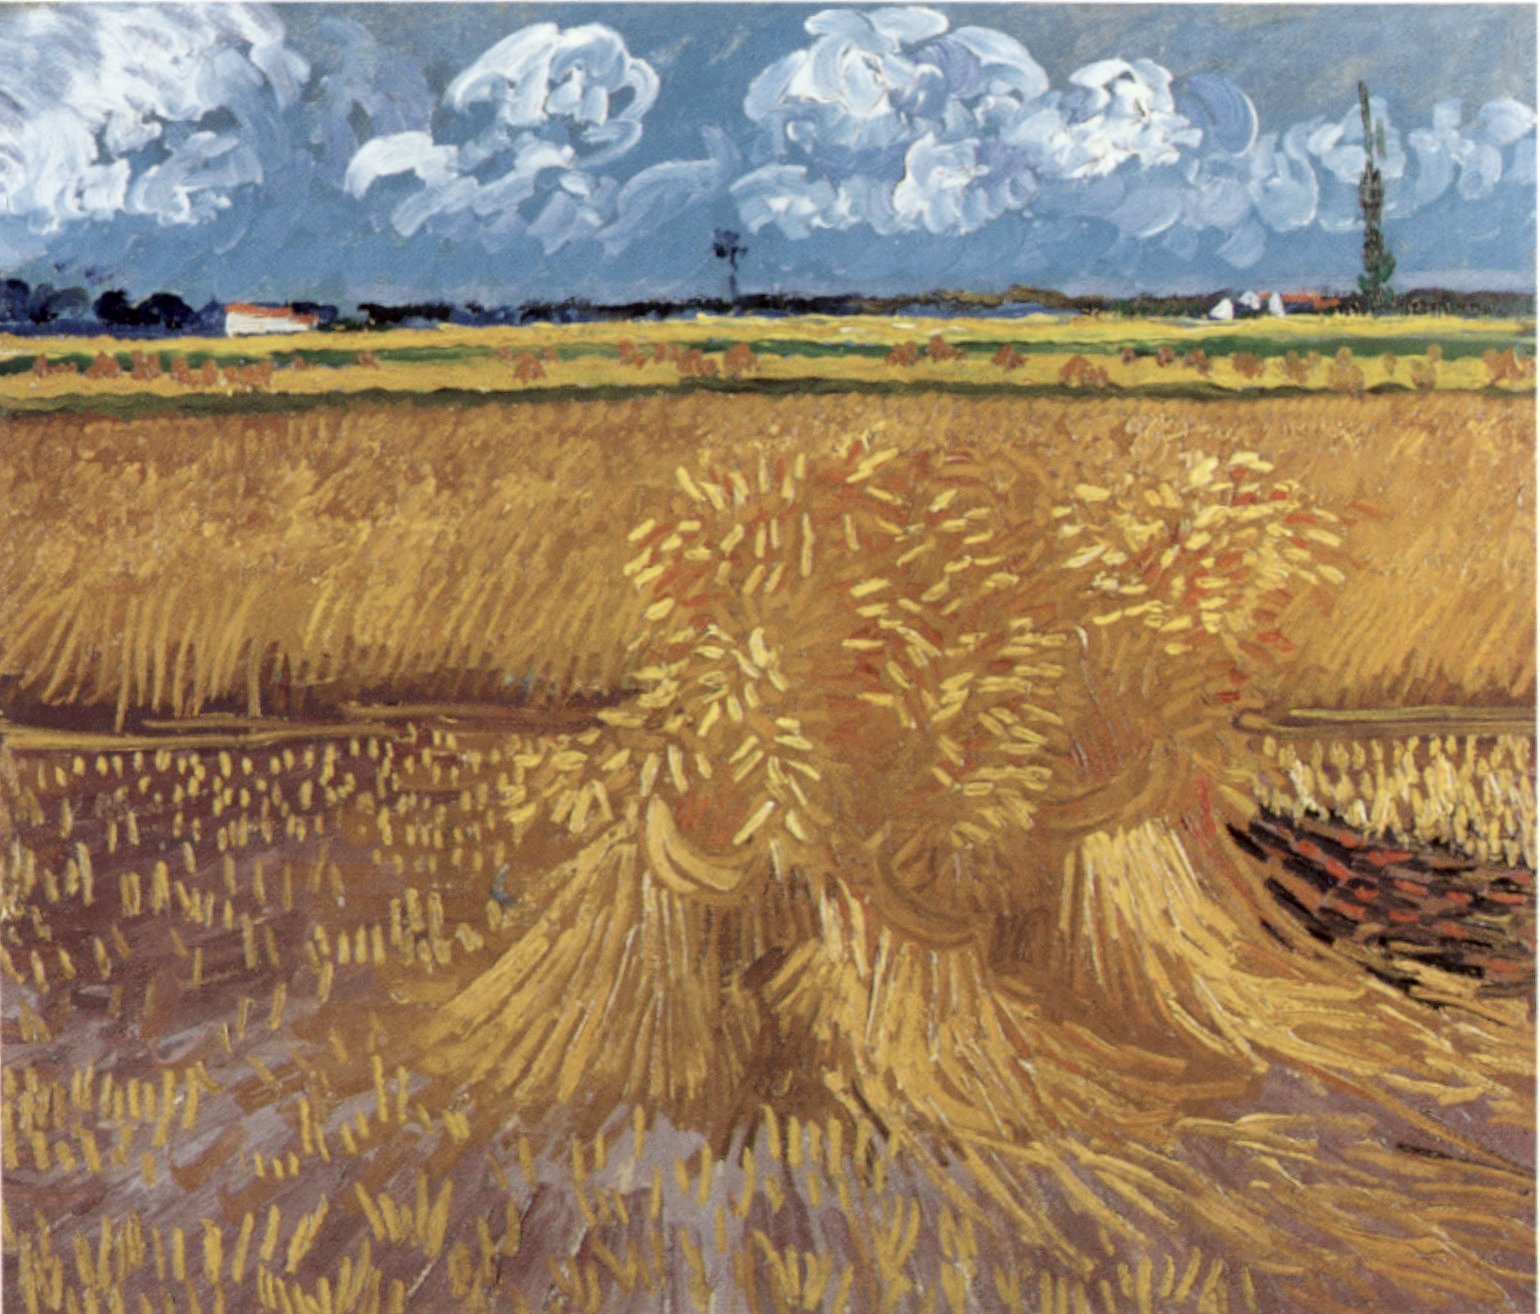 Vincent+Van+Gogh-1853-1890 (825).jpg